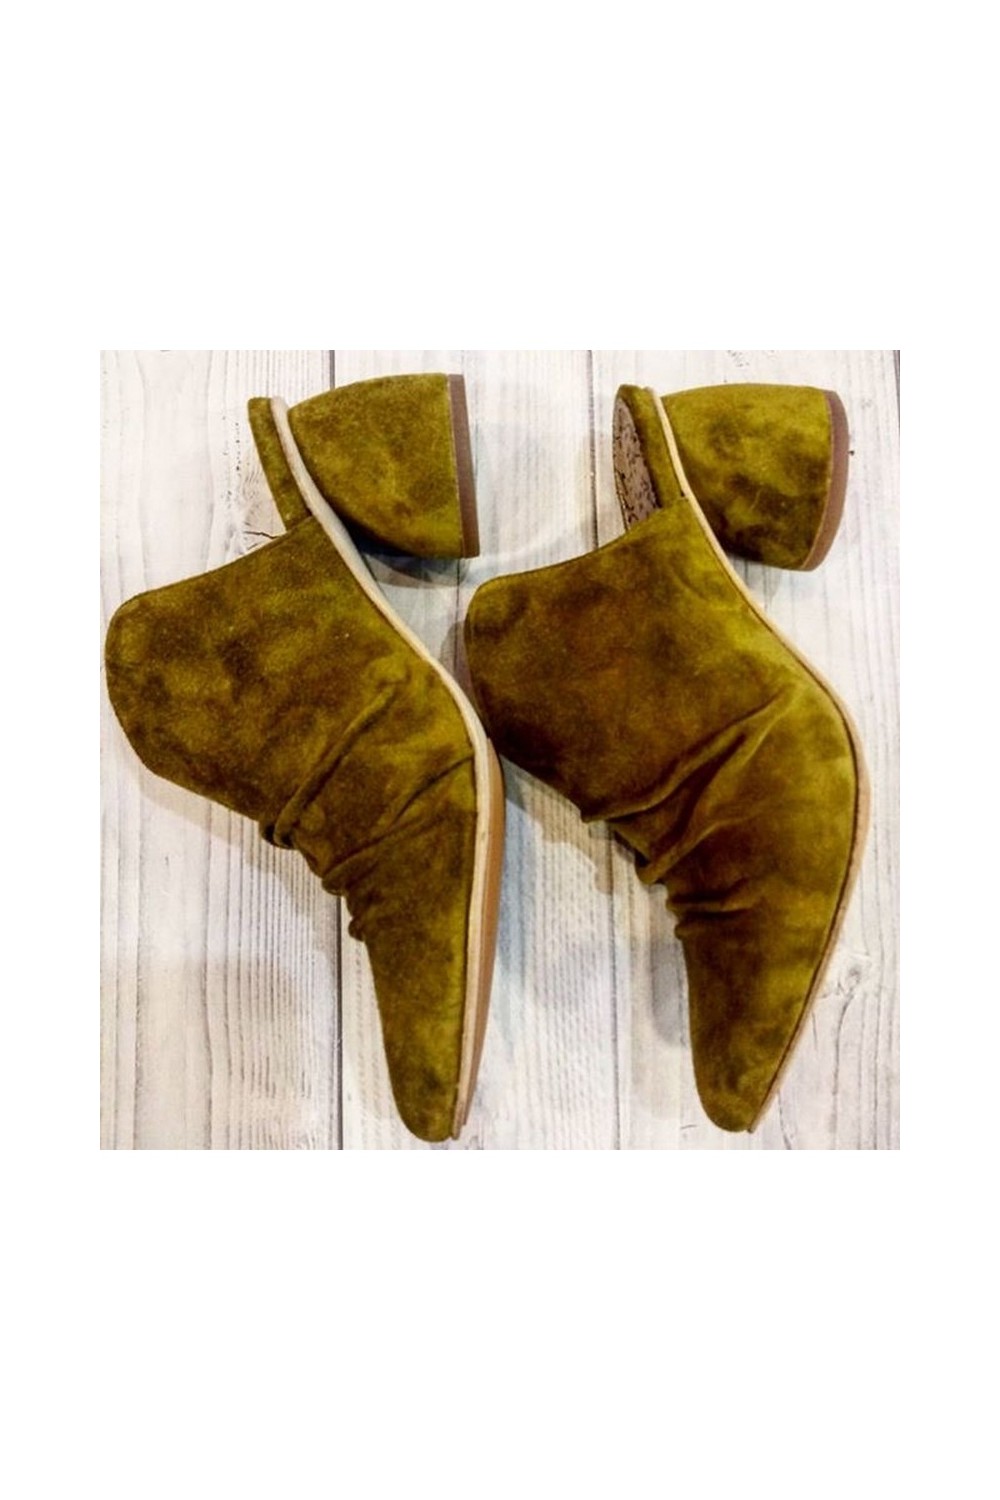 Buy Soft comfortable women's suede designer green clogs, wide heel narrow toe shoes